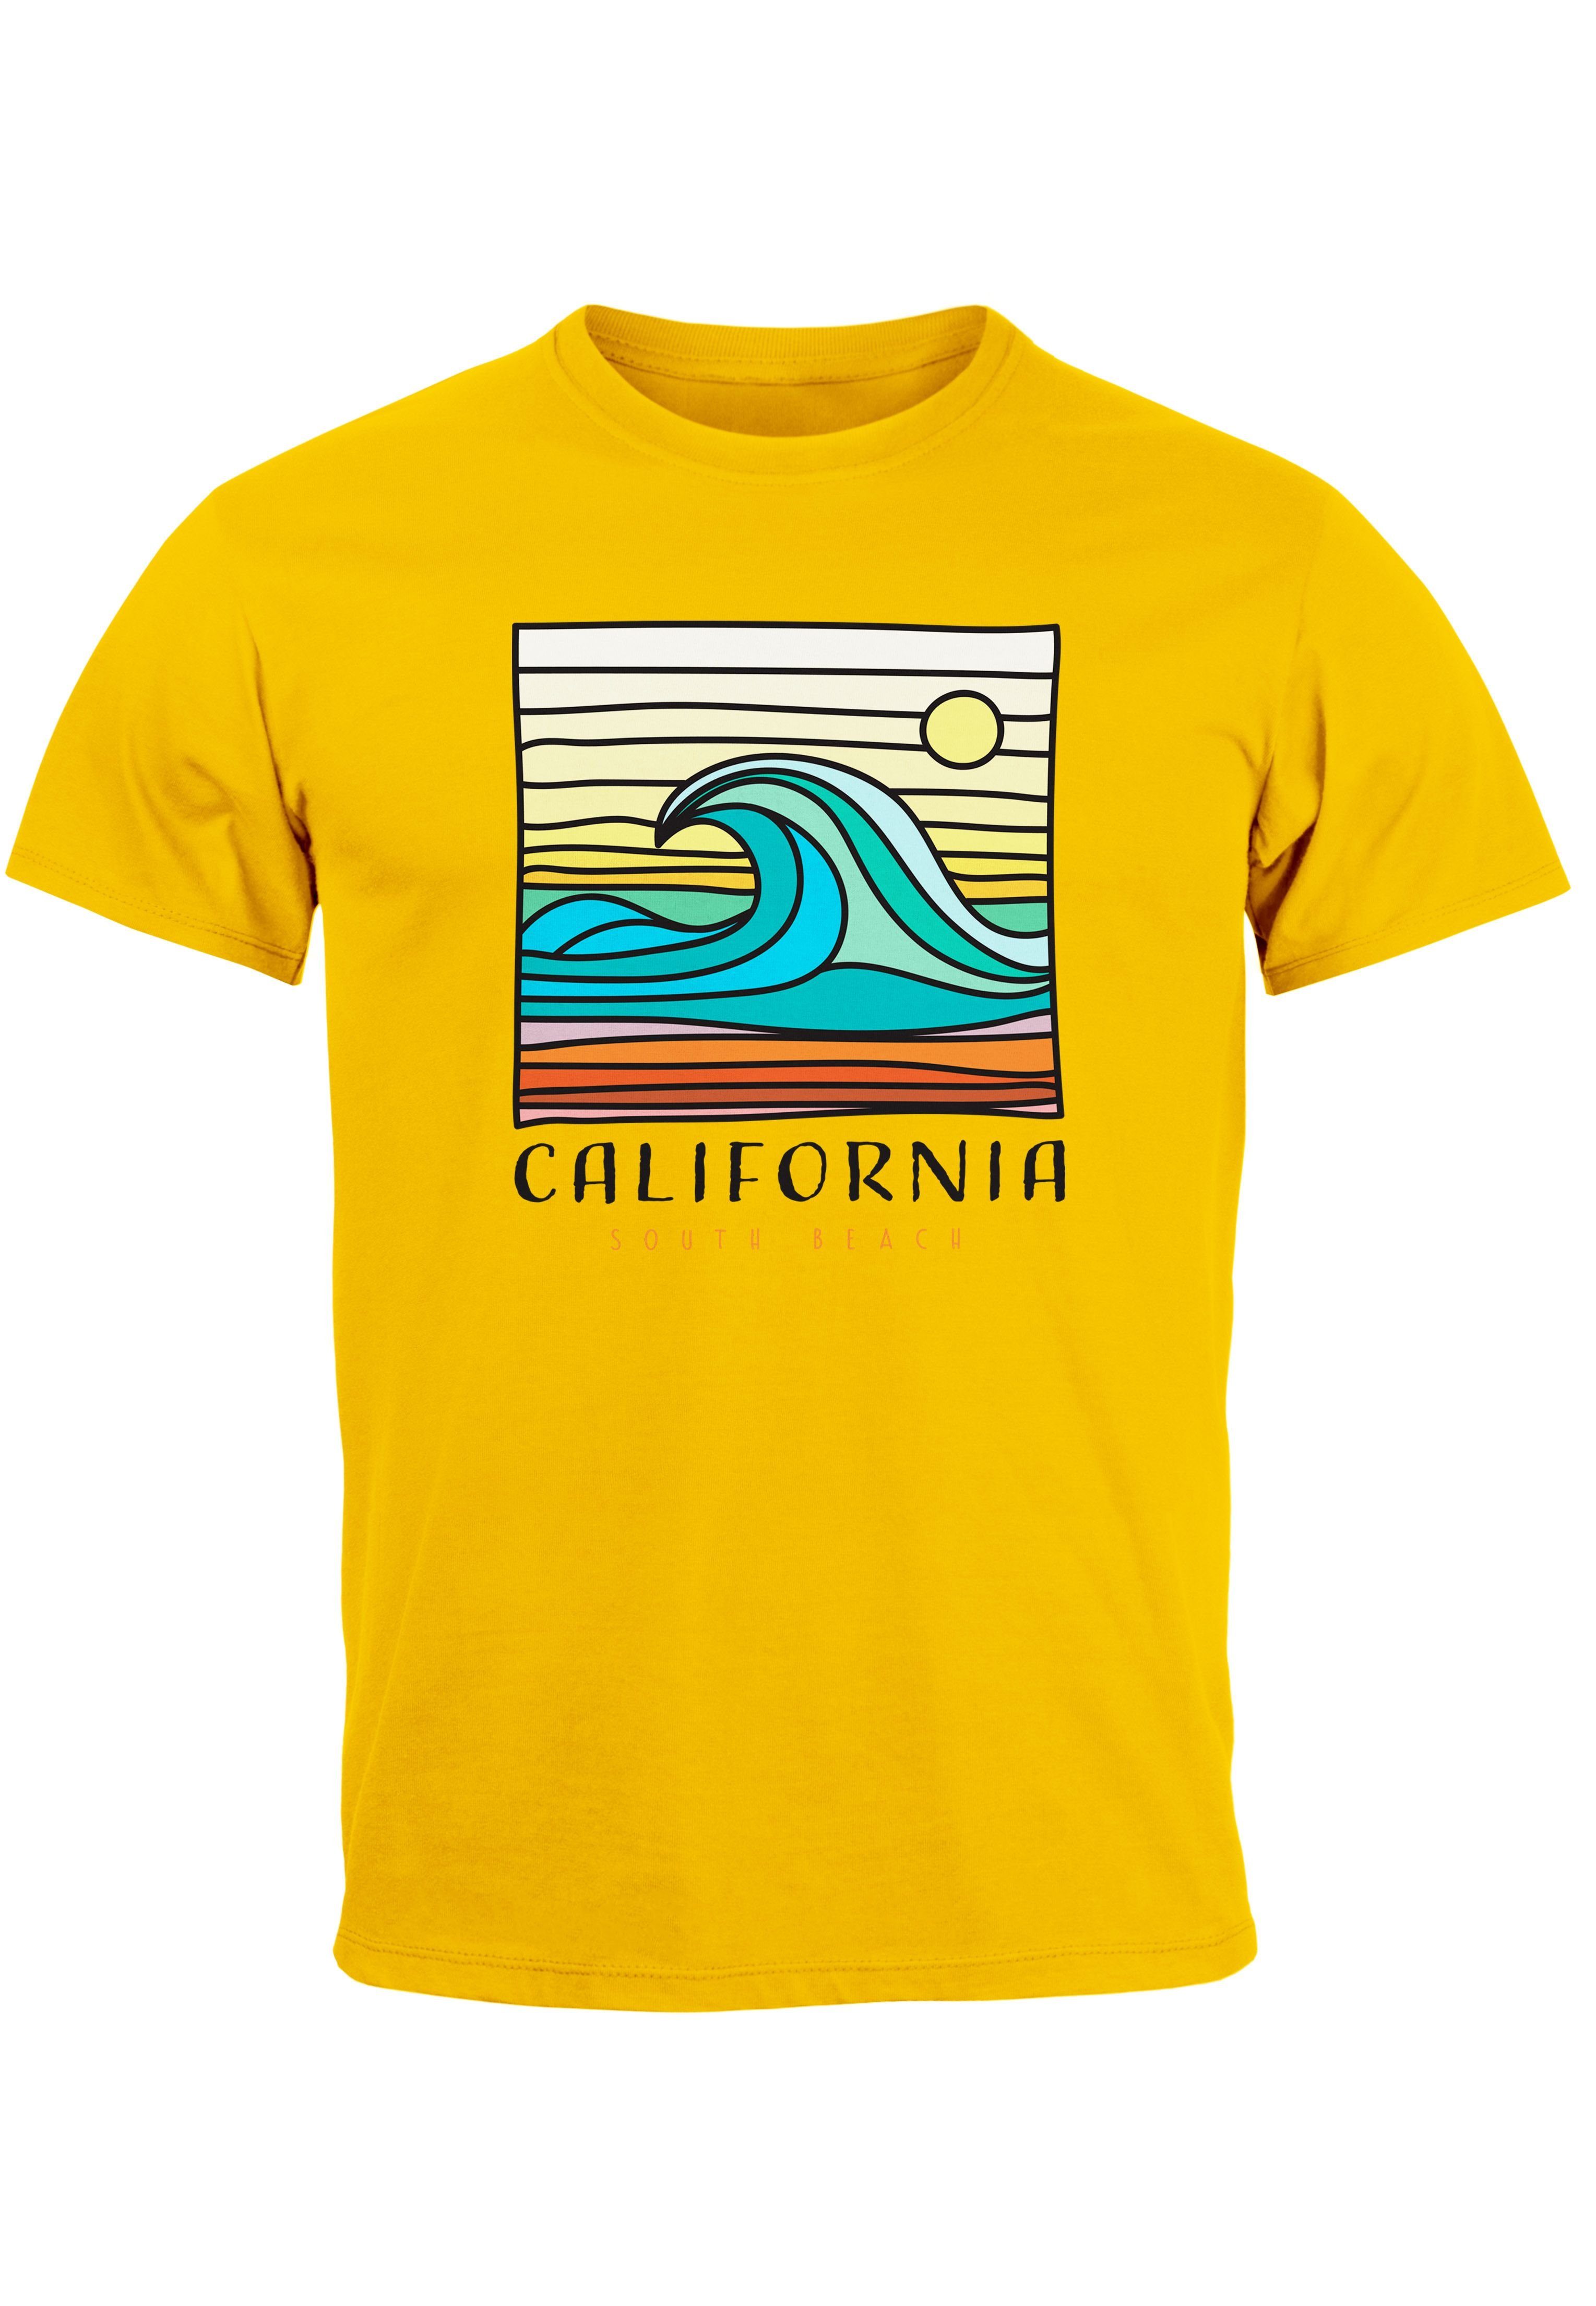 Neverless Print-Shirt Herren T-Shirt California South Beach Welle Wave Surfing Print Aufdruc mit Print gelb